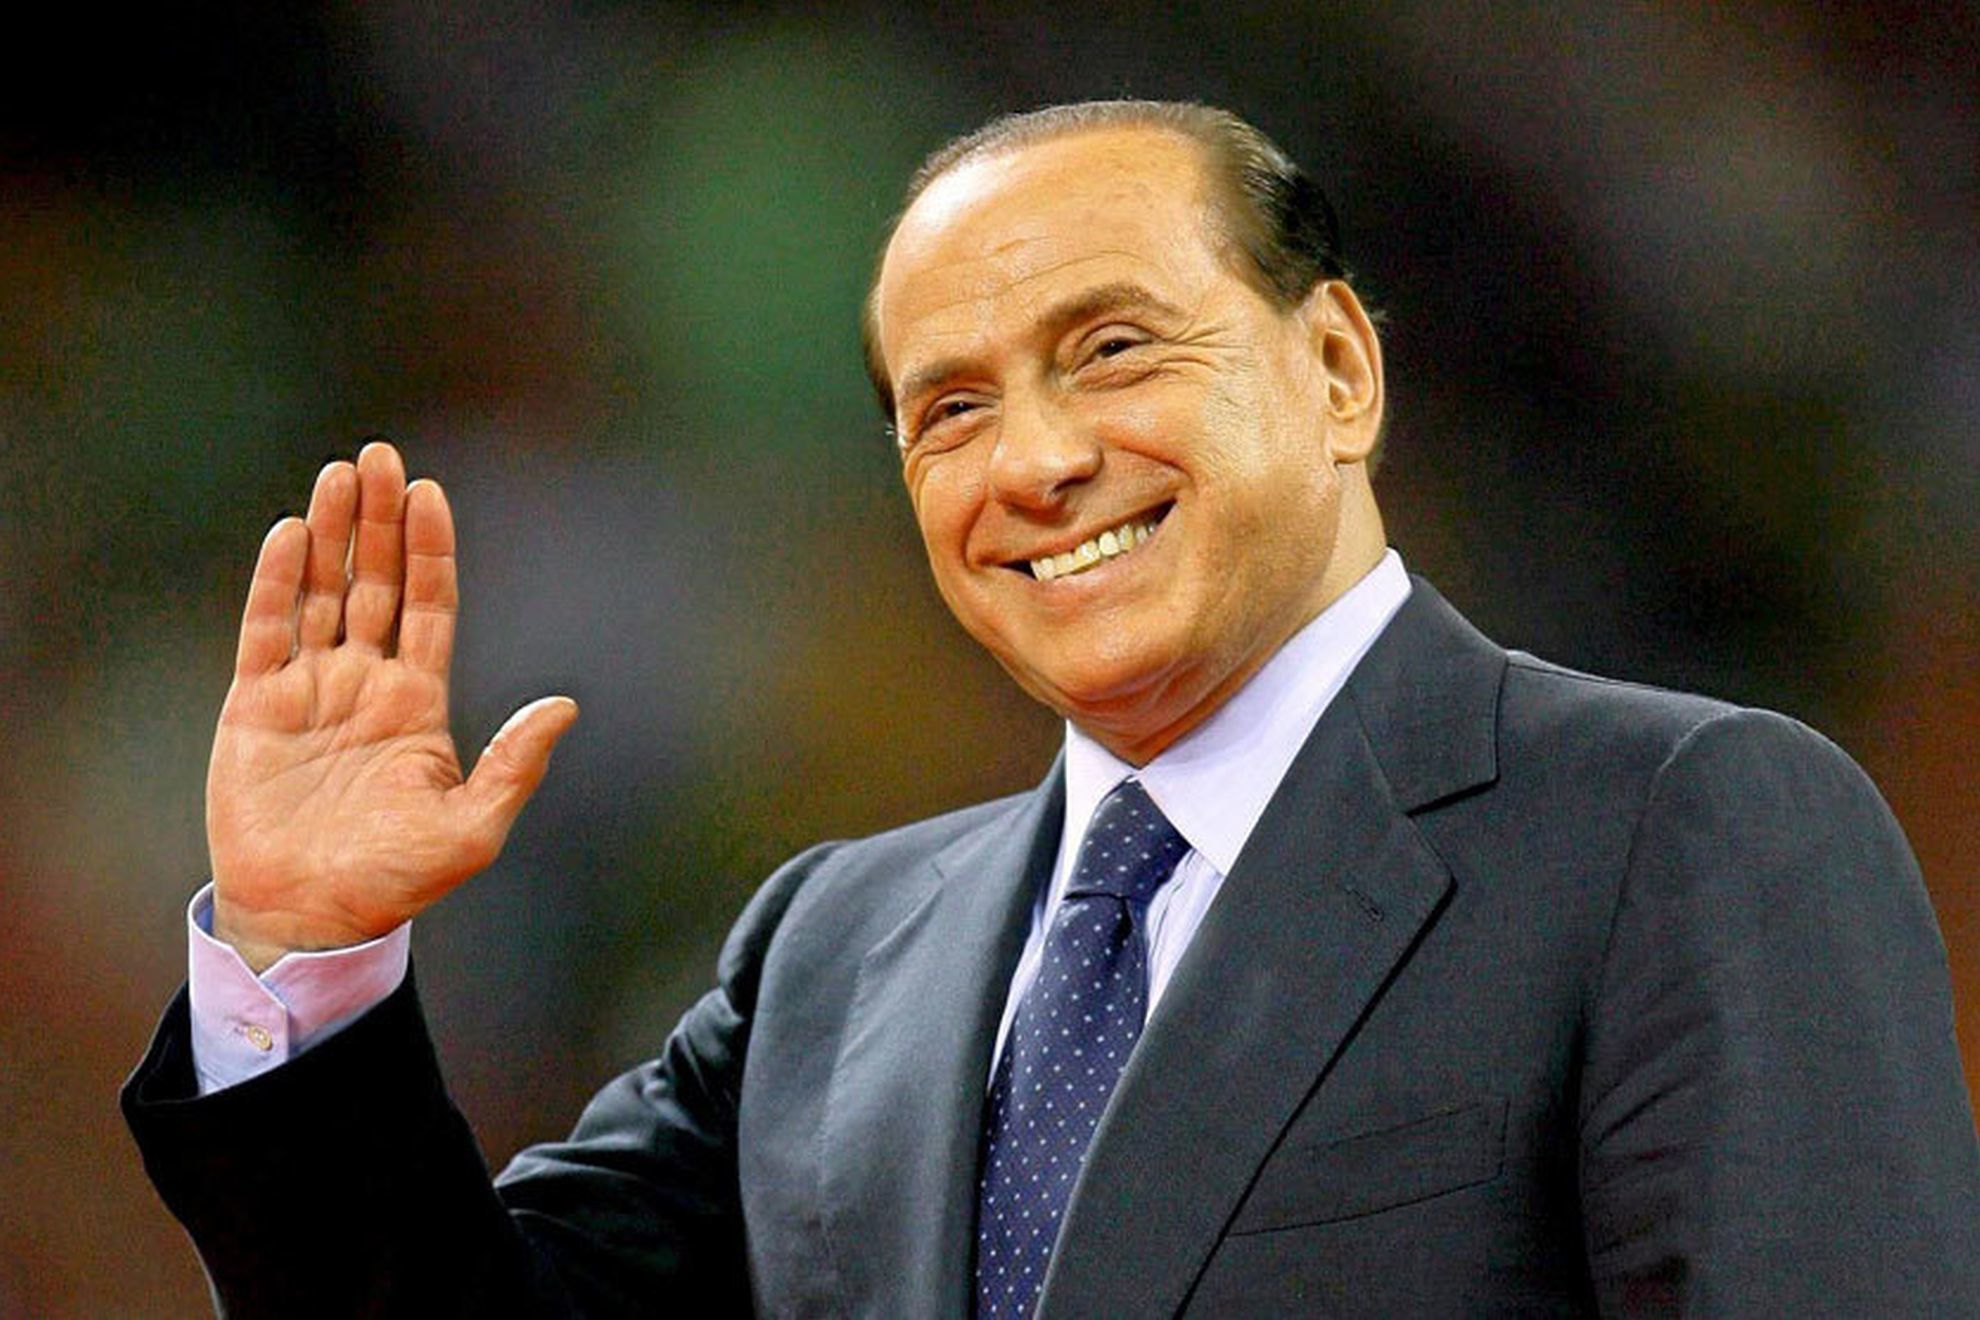 Silvio Berlusconi Net Worth: How rich was the former AC Milan president?